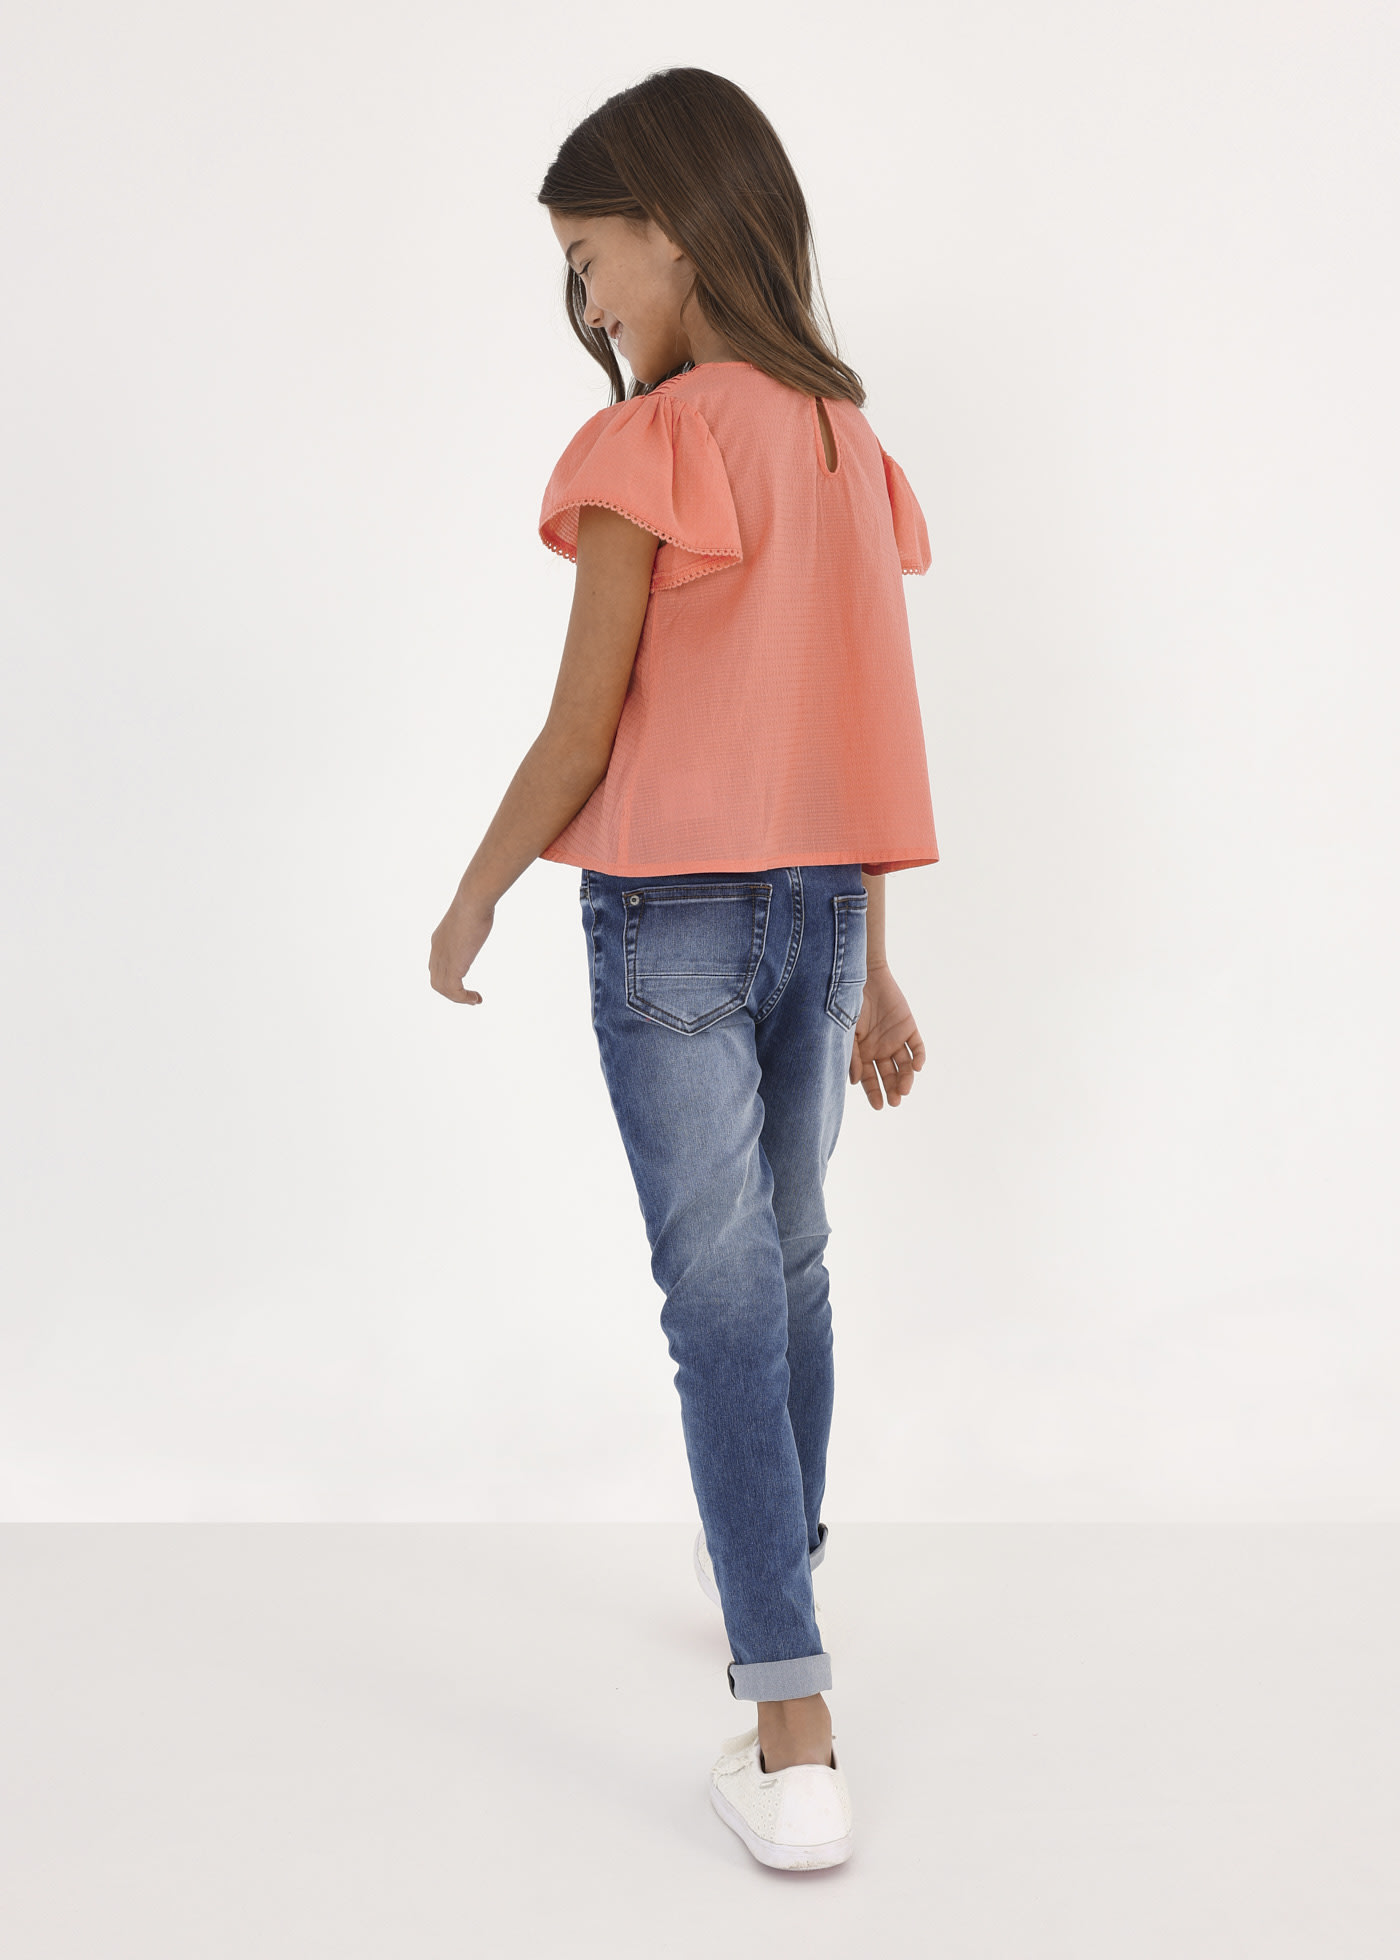 Kurzarm Tunika-Bluse aus Baumwolle Teenager Mädchen